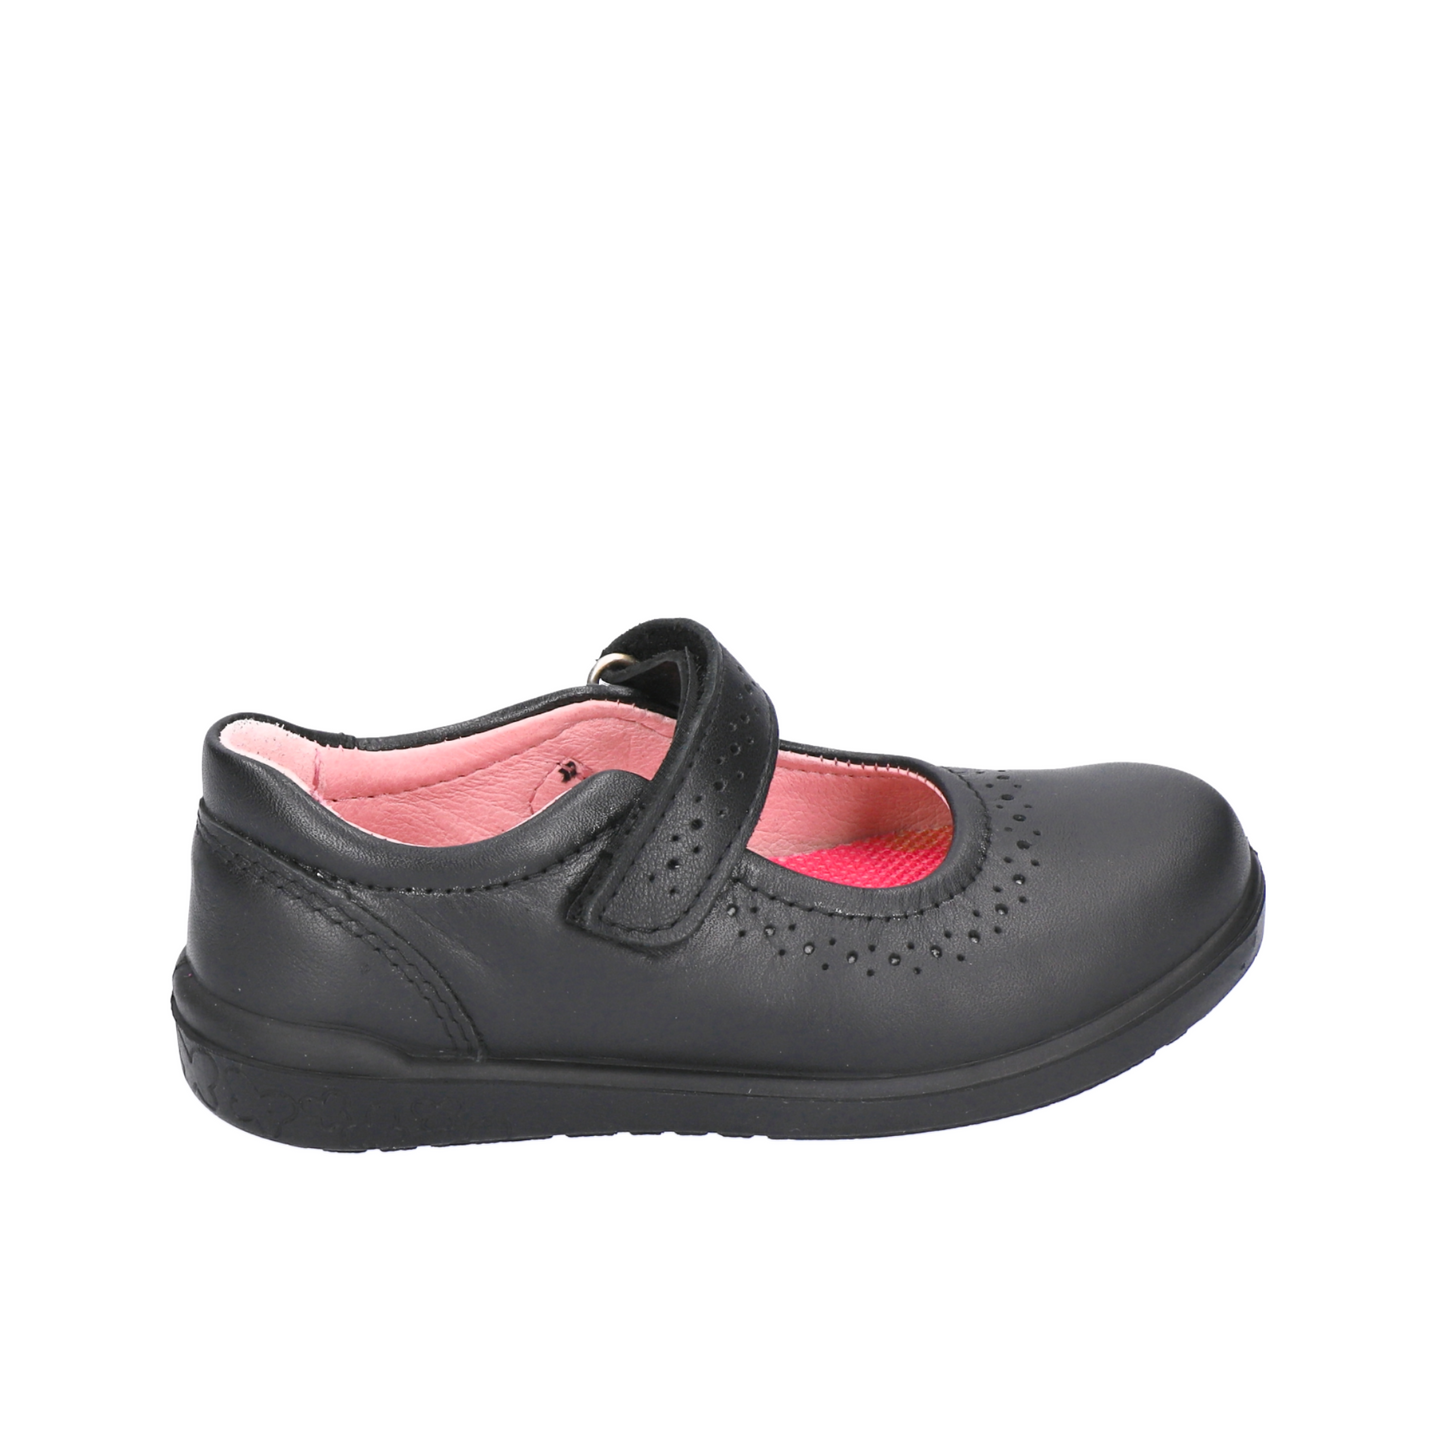 Lillia Black Leather Girls School Shoe